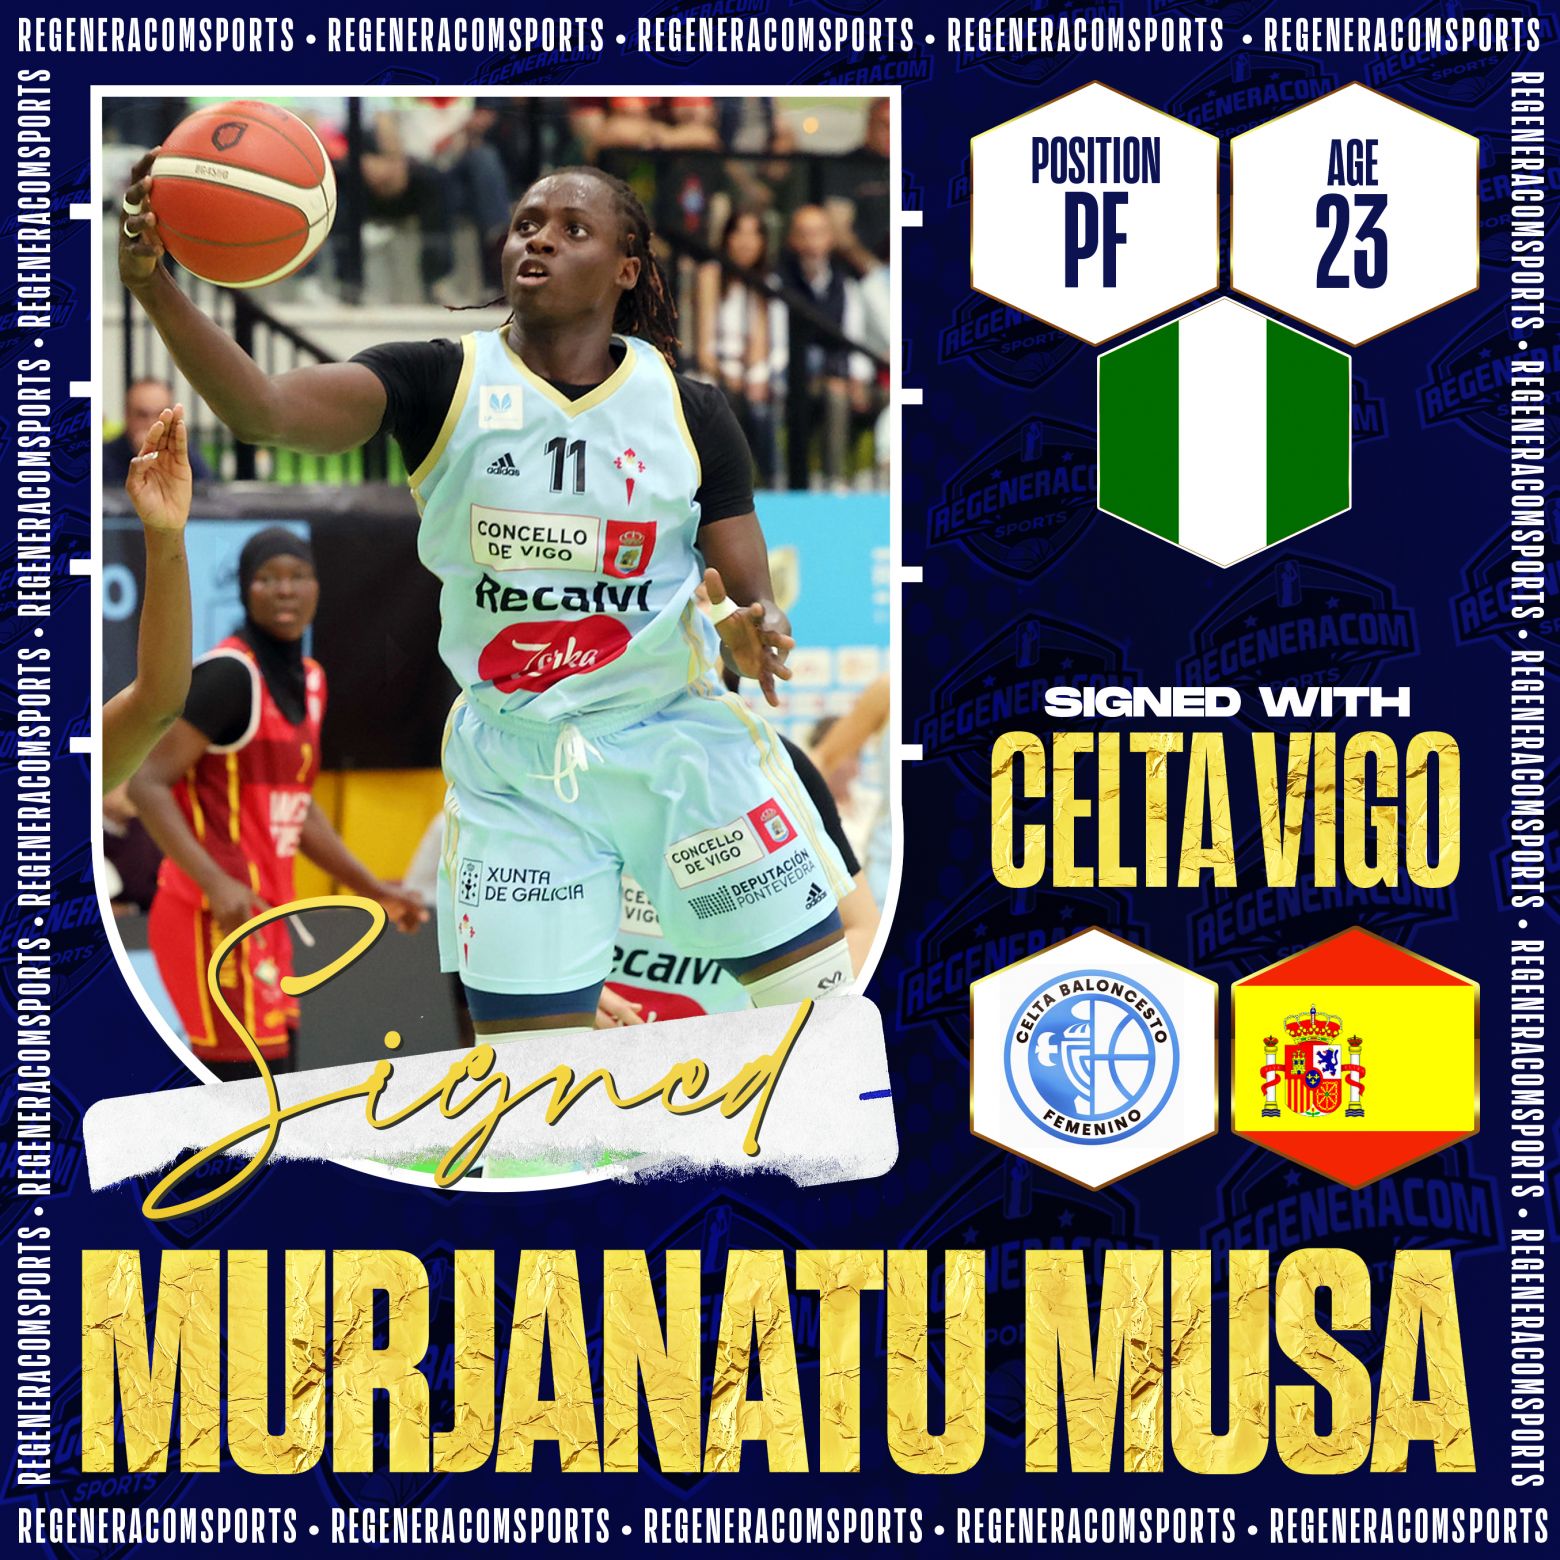 MURJANATU MUSA renueva con Celta Vigo para la temporada 2023/24